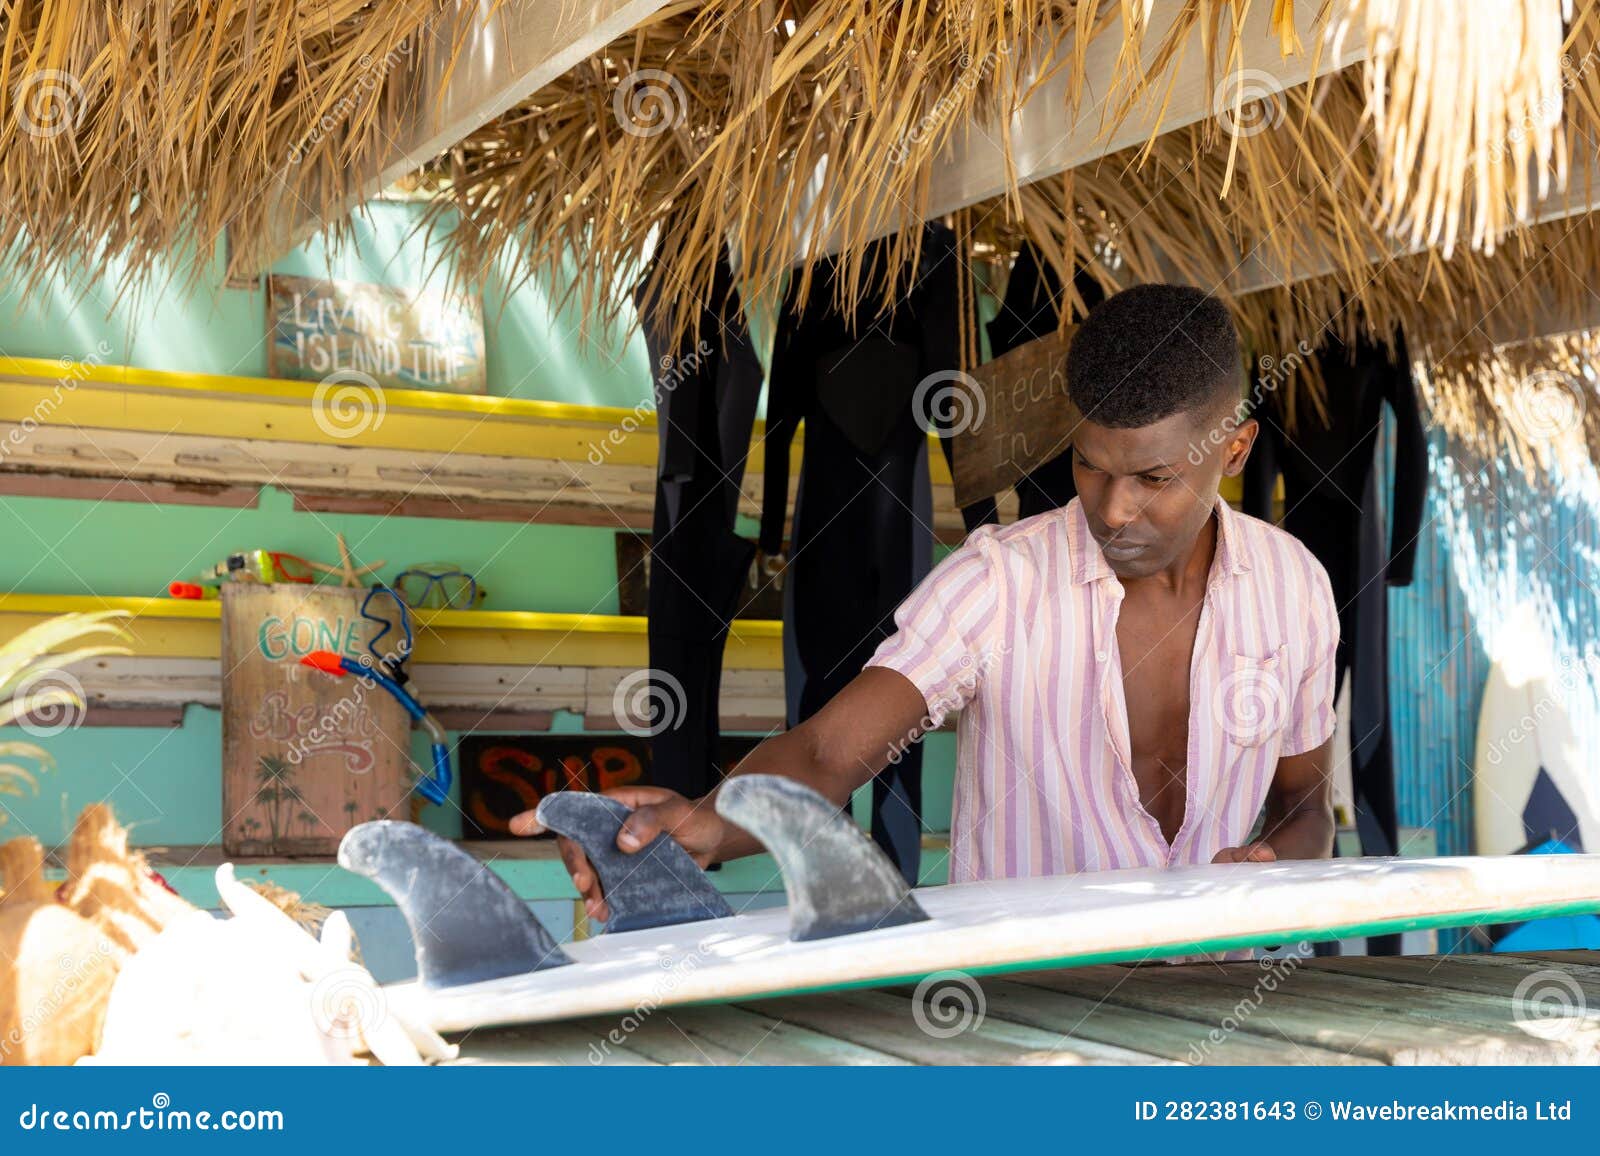 focussed african american man preparing surfboard behind counter of surf hire beach shack